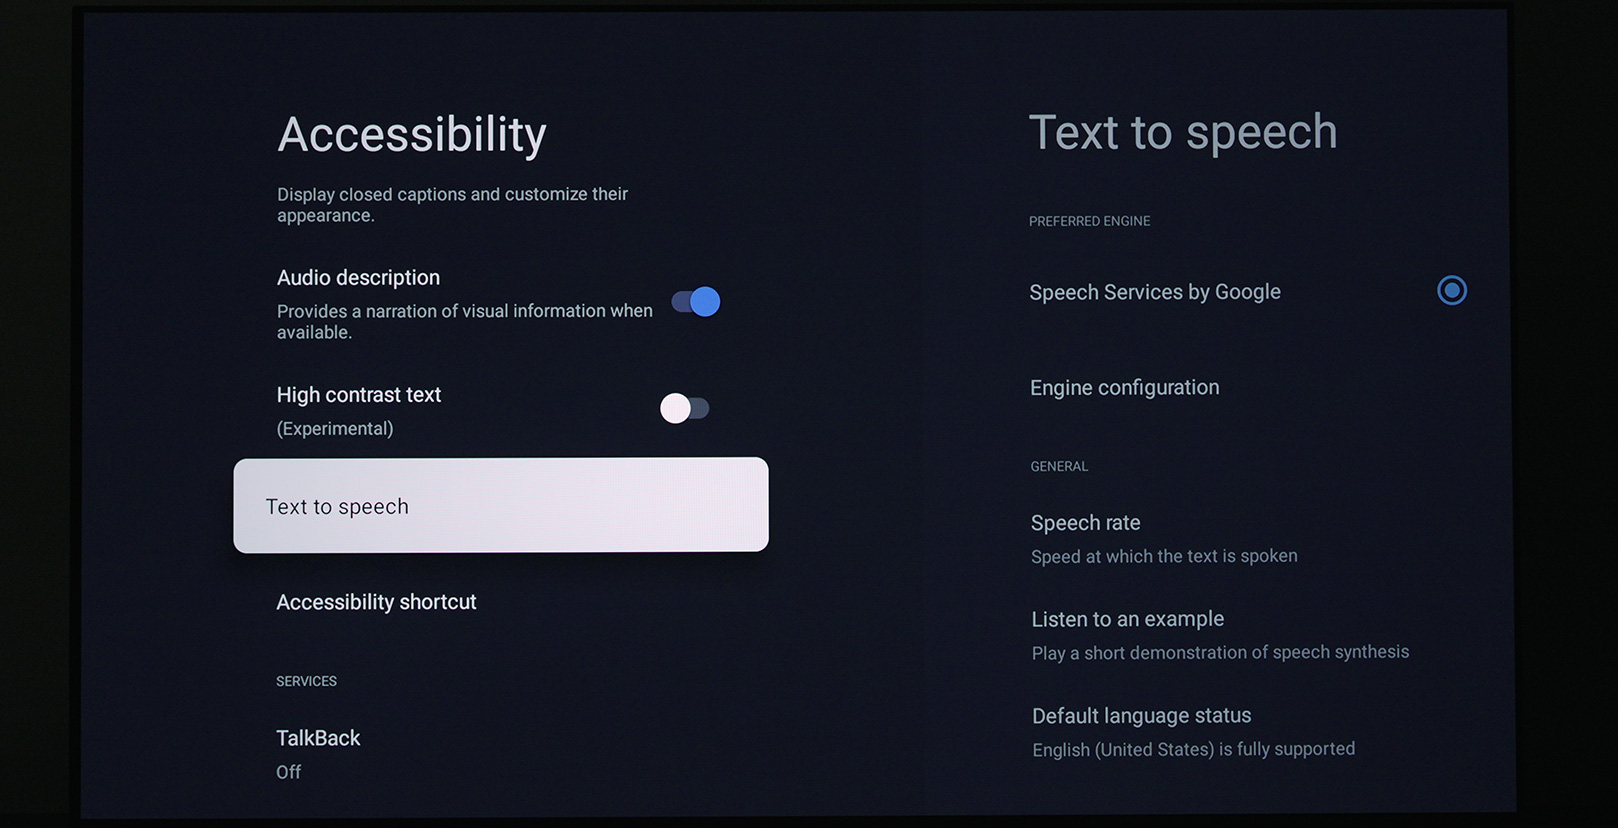 BRAVIA's accessibility features menu